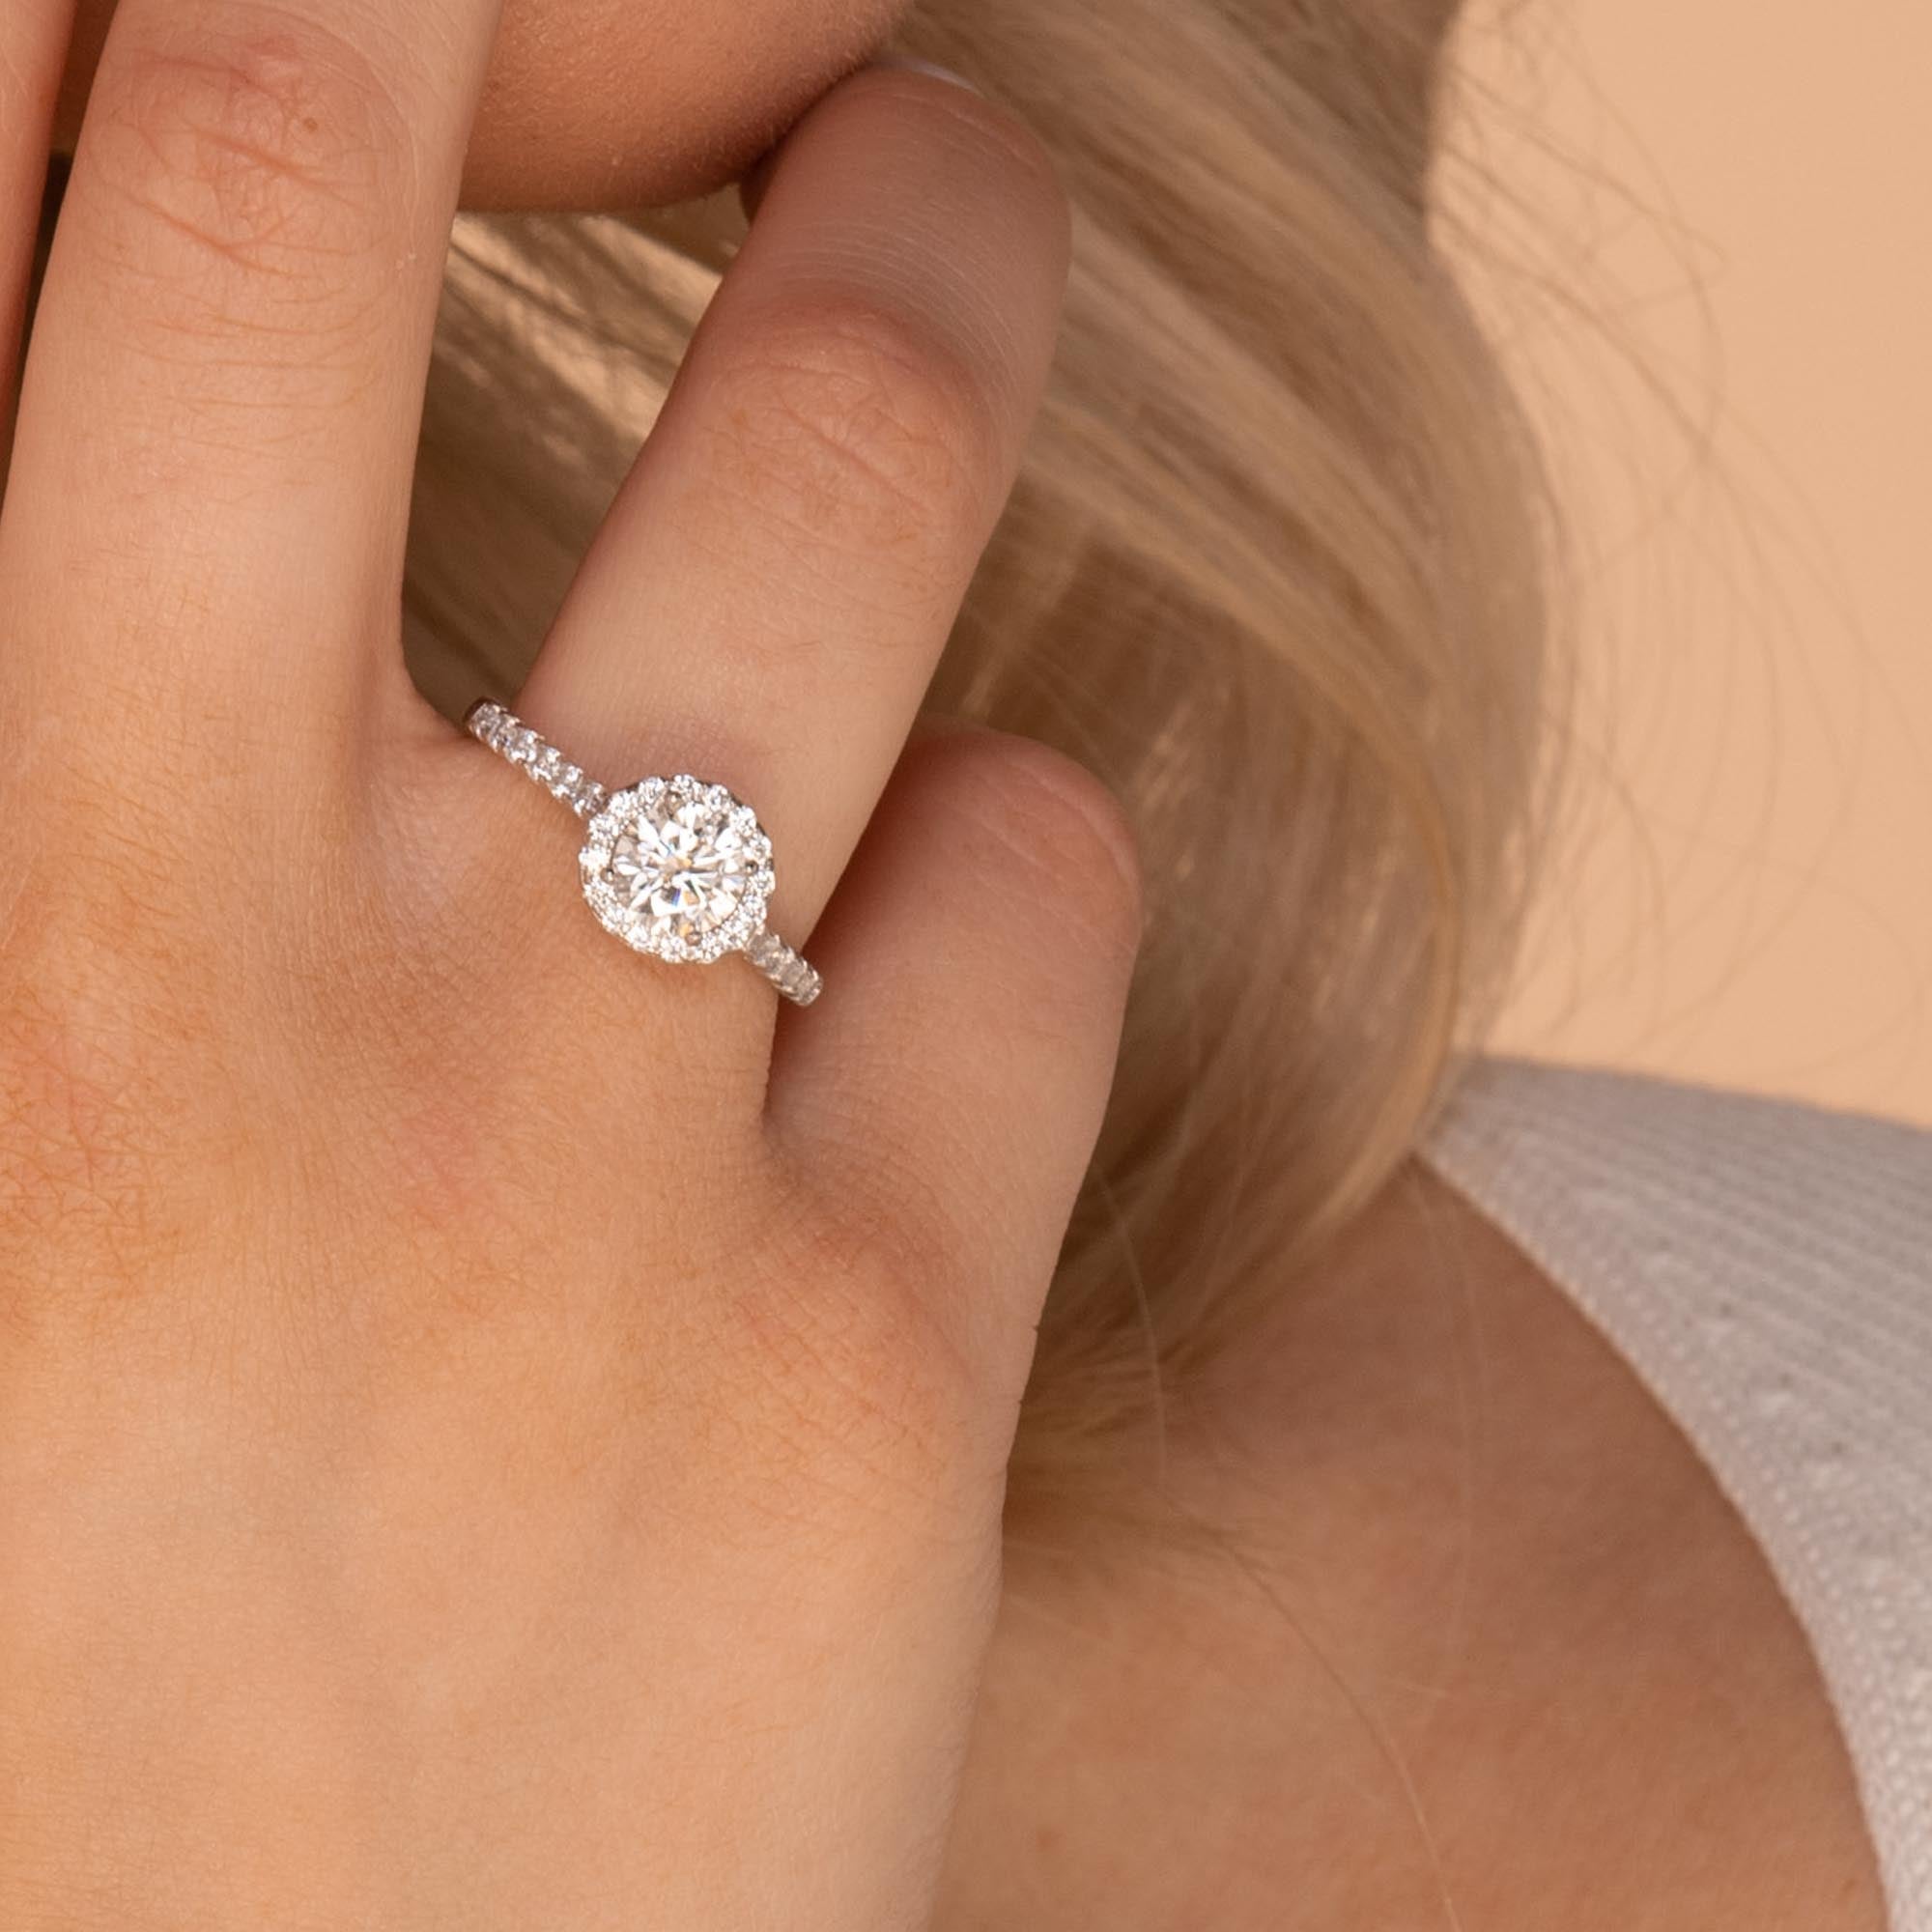 1 ct The Victoria Moissanite Diamond Engagement Ring